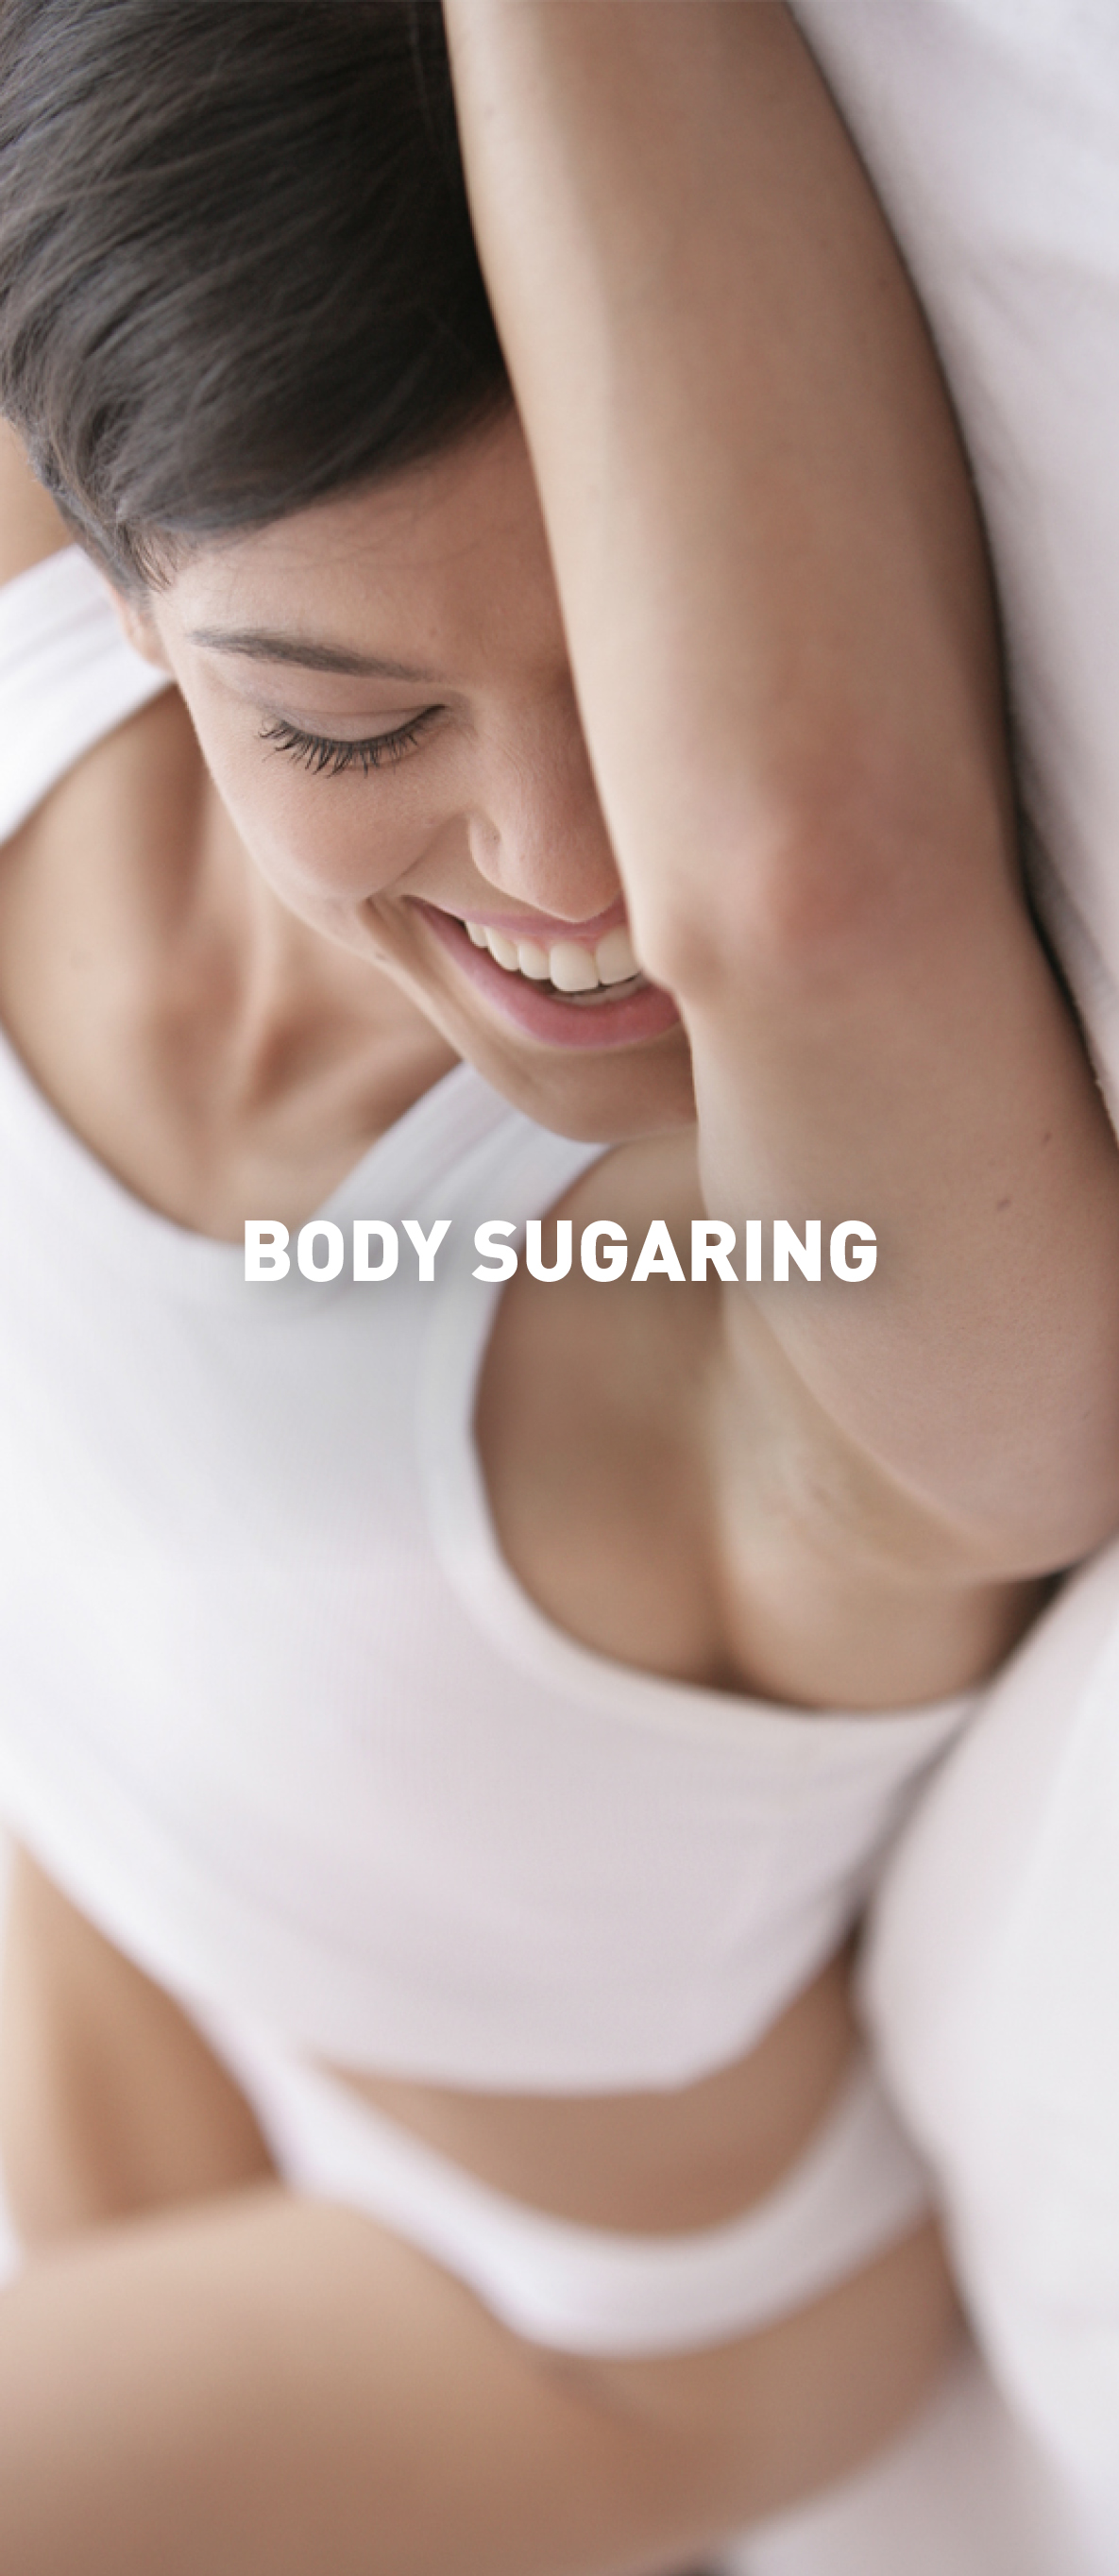 Body Sugaring